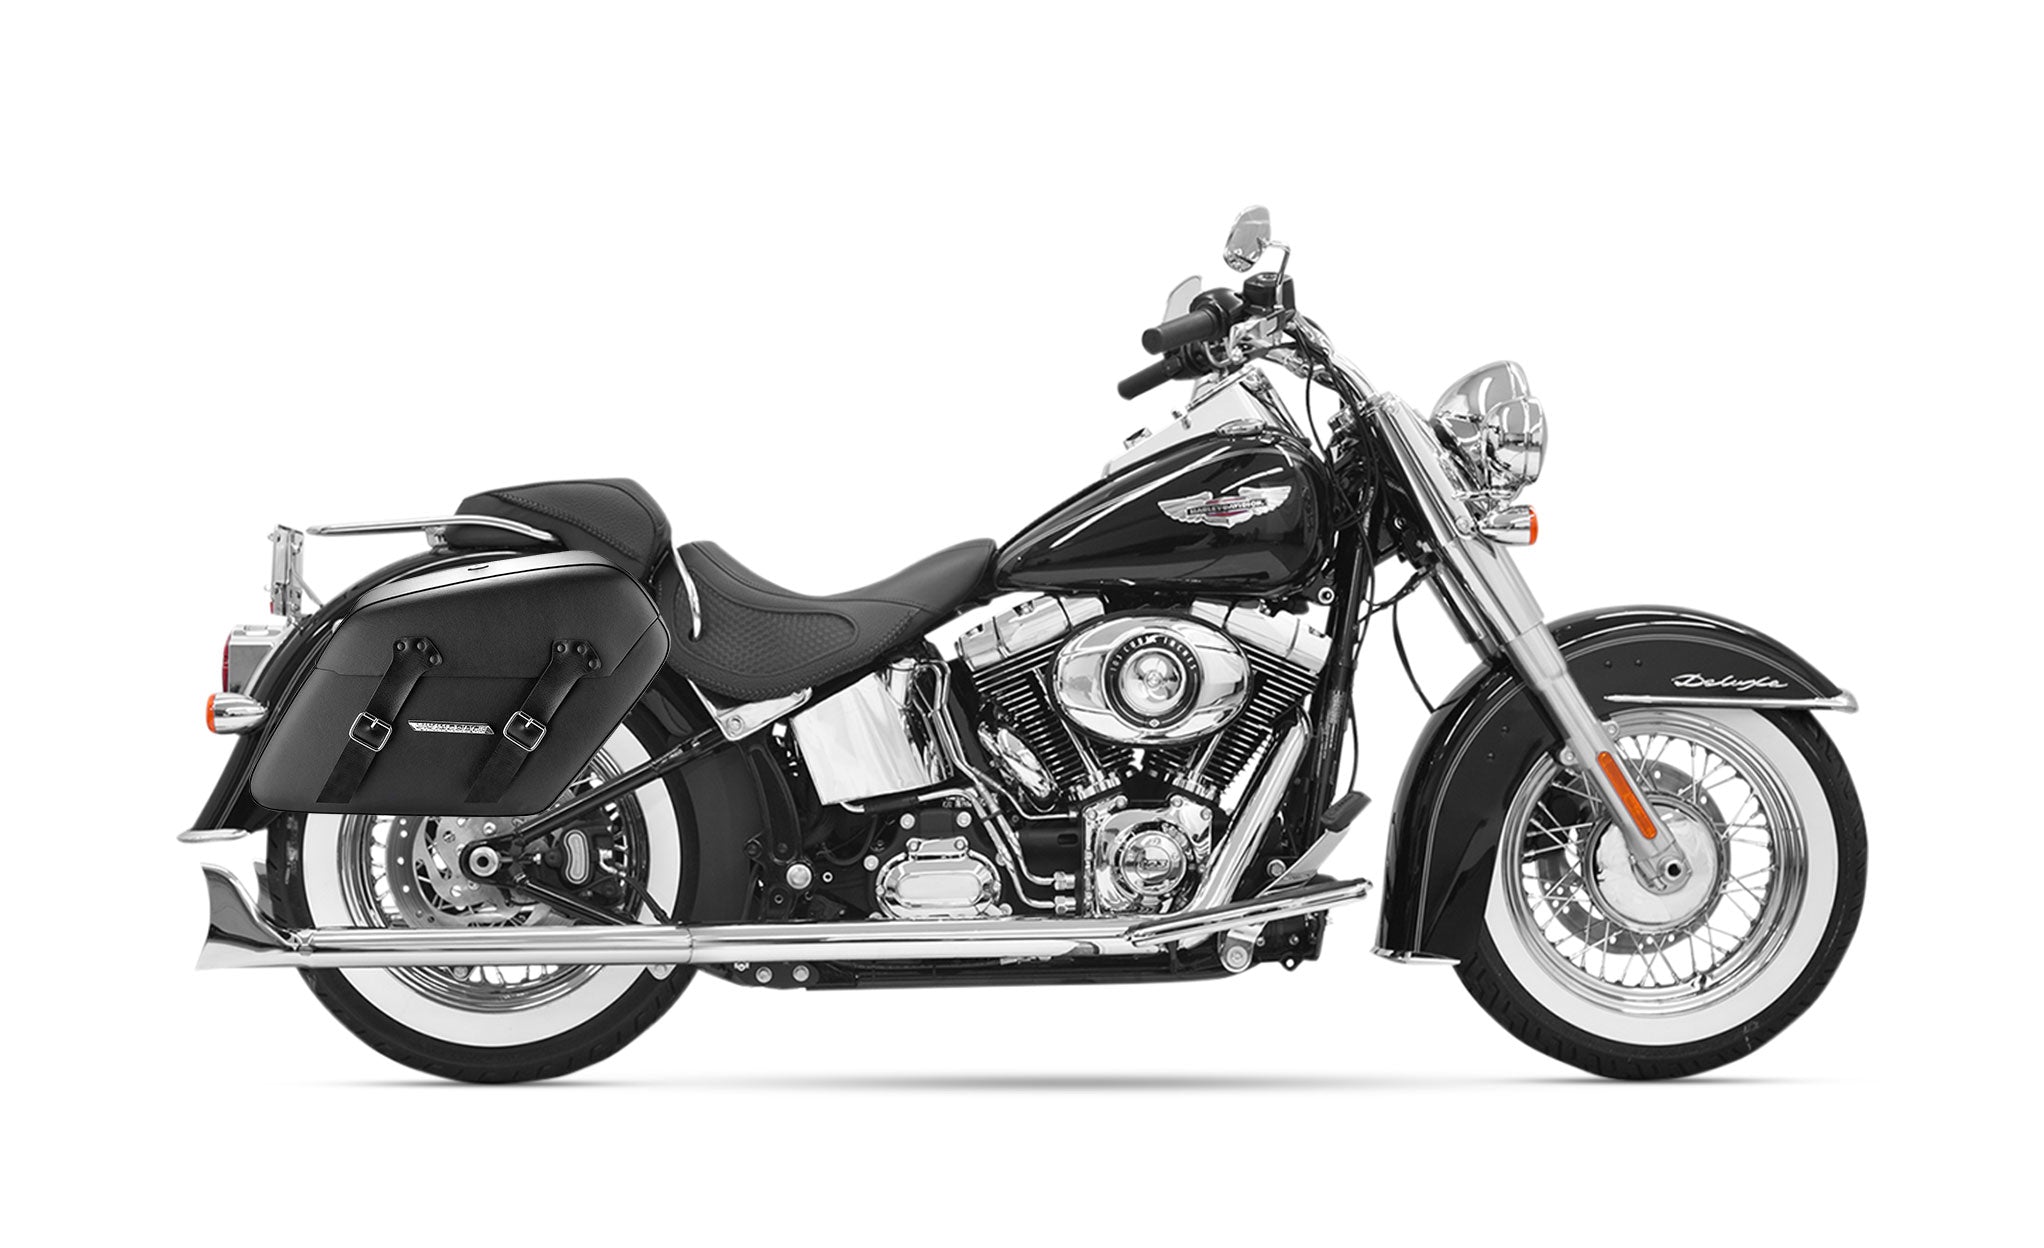 42L - Baldur Extra Large Leather Wrapped Motorcycle Hard Saddlebags for Harley Softail Heritage FLSTICCI on Bike Photo @expand